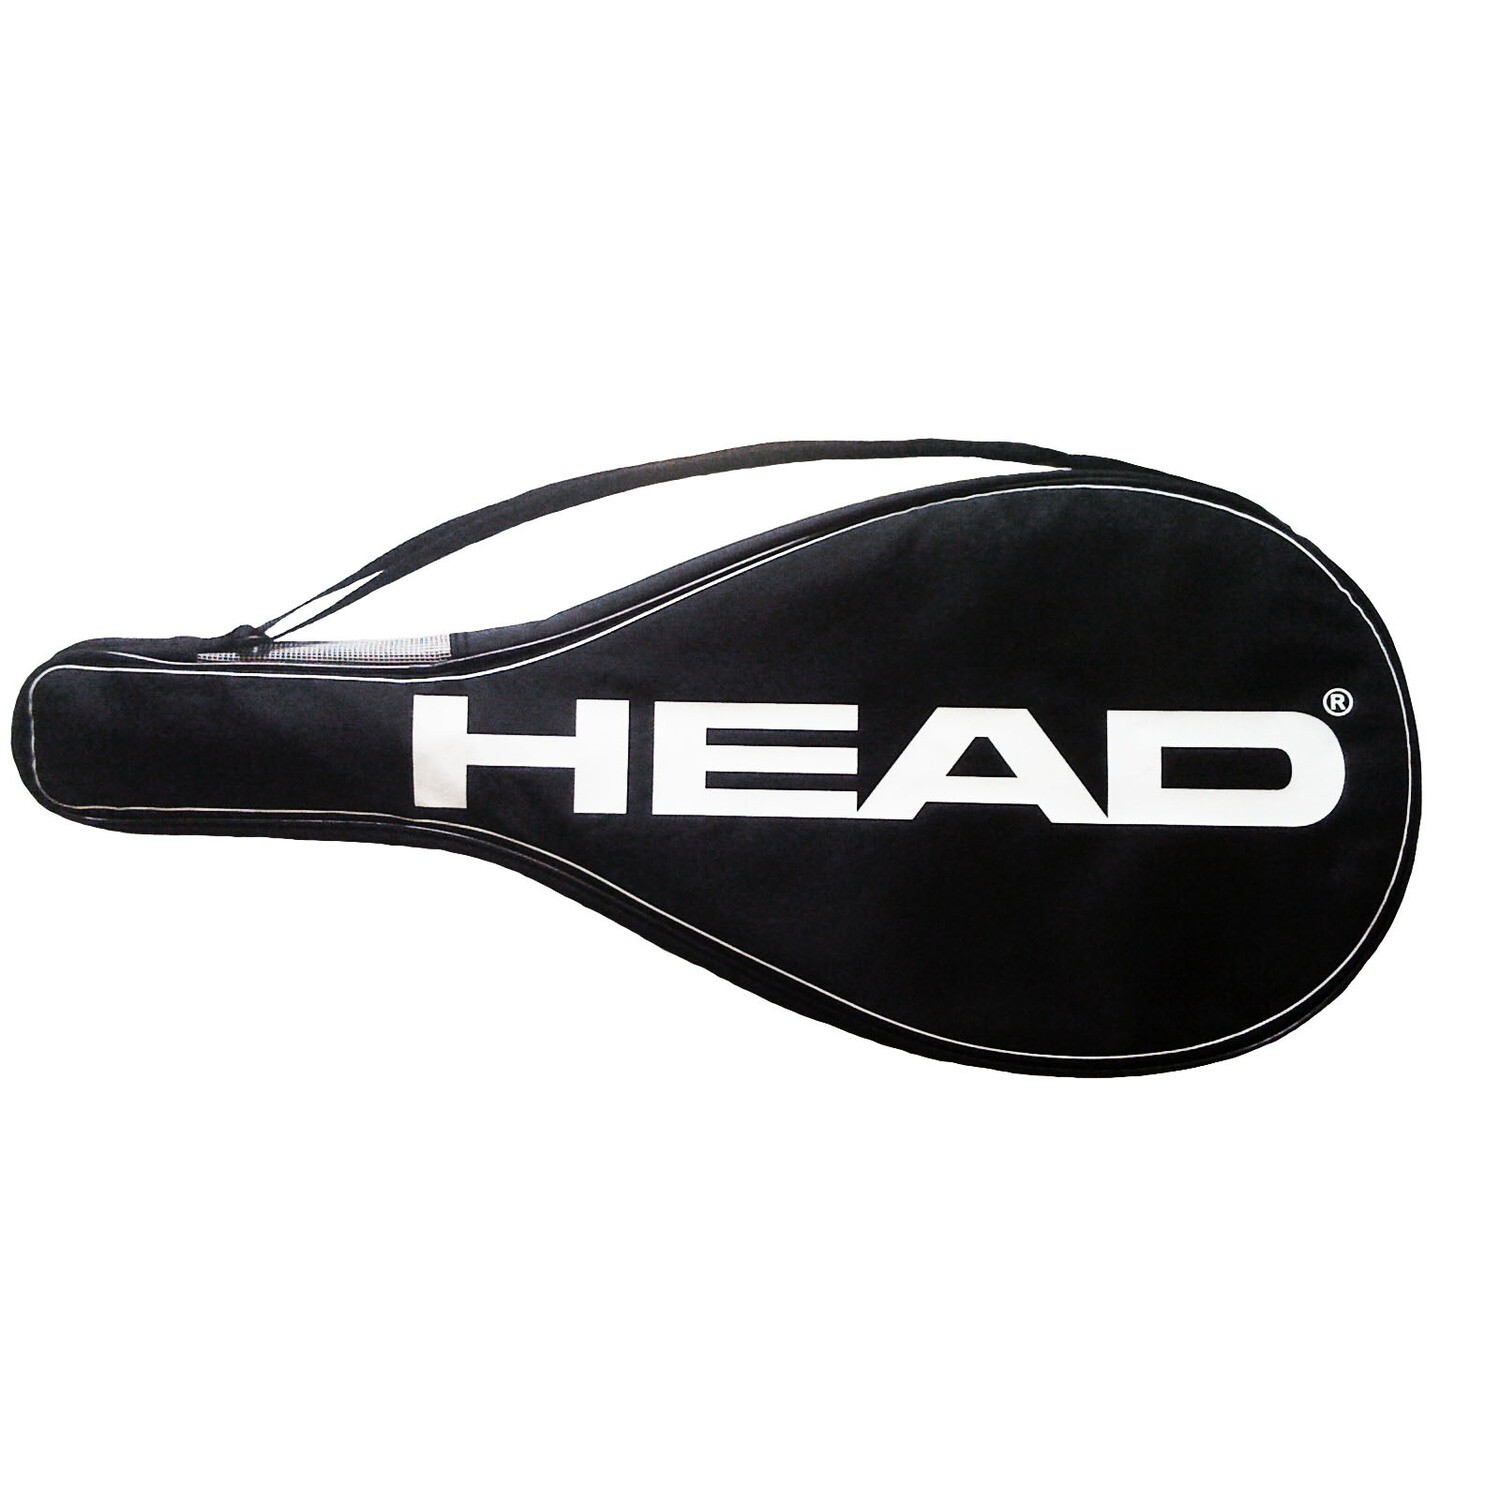 Head Tennis Racket Cover - Black